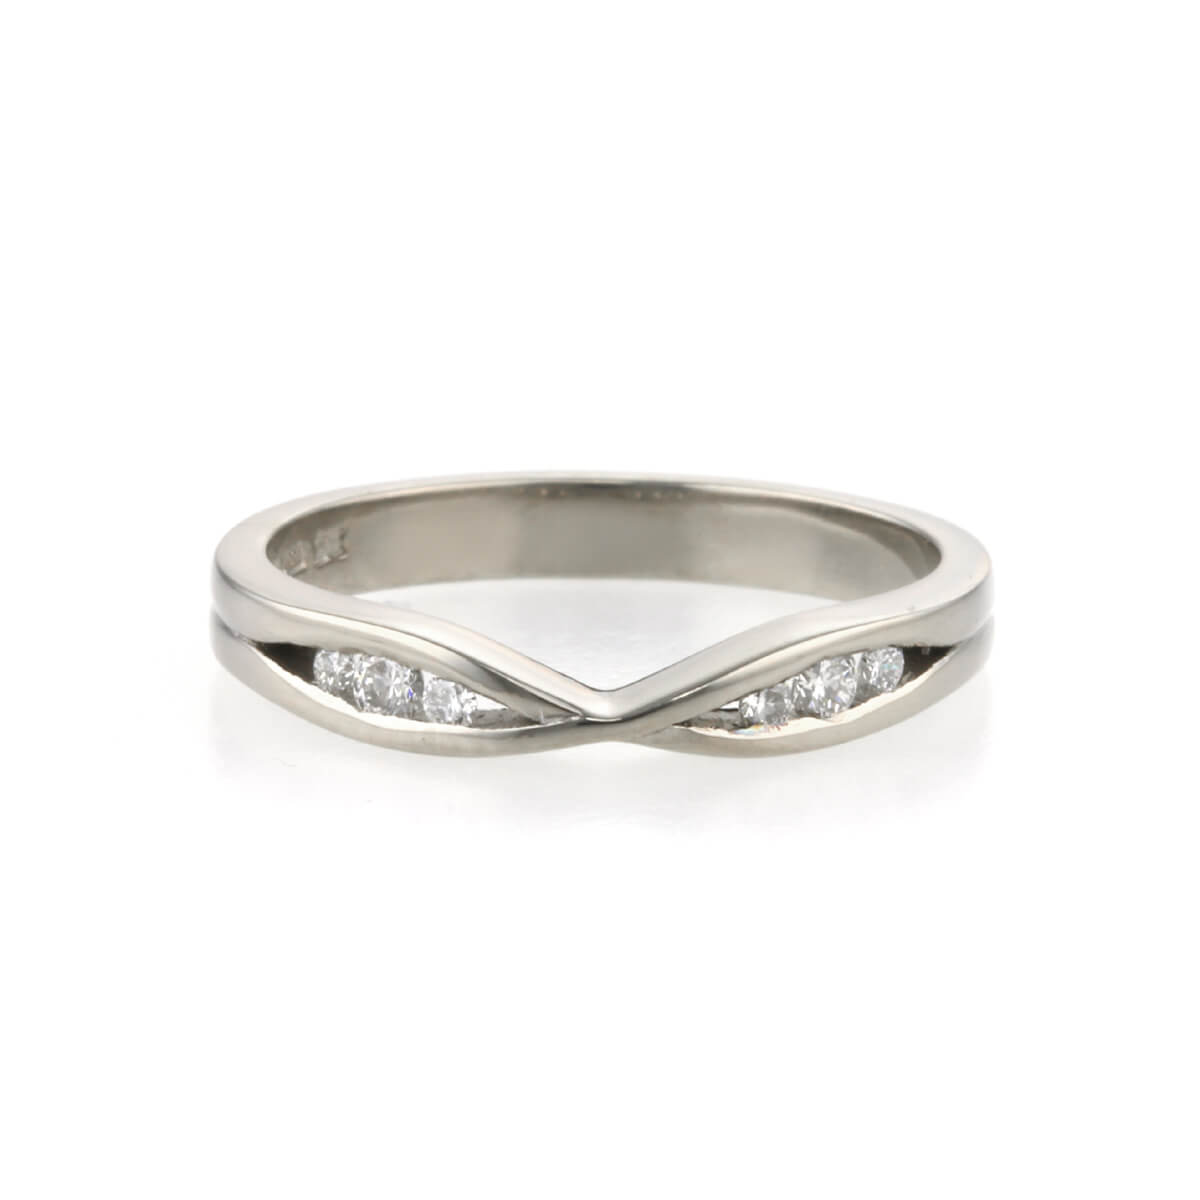 Handmade Infinity Inspired Wedding Ring made in 18ct white gold and diamonds